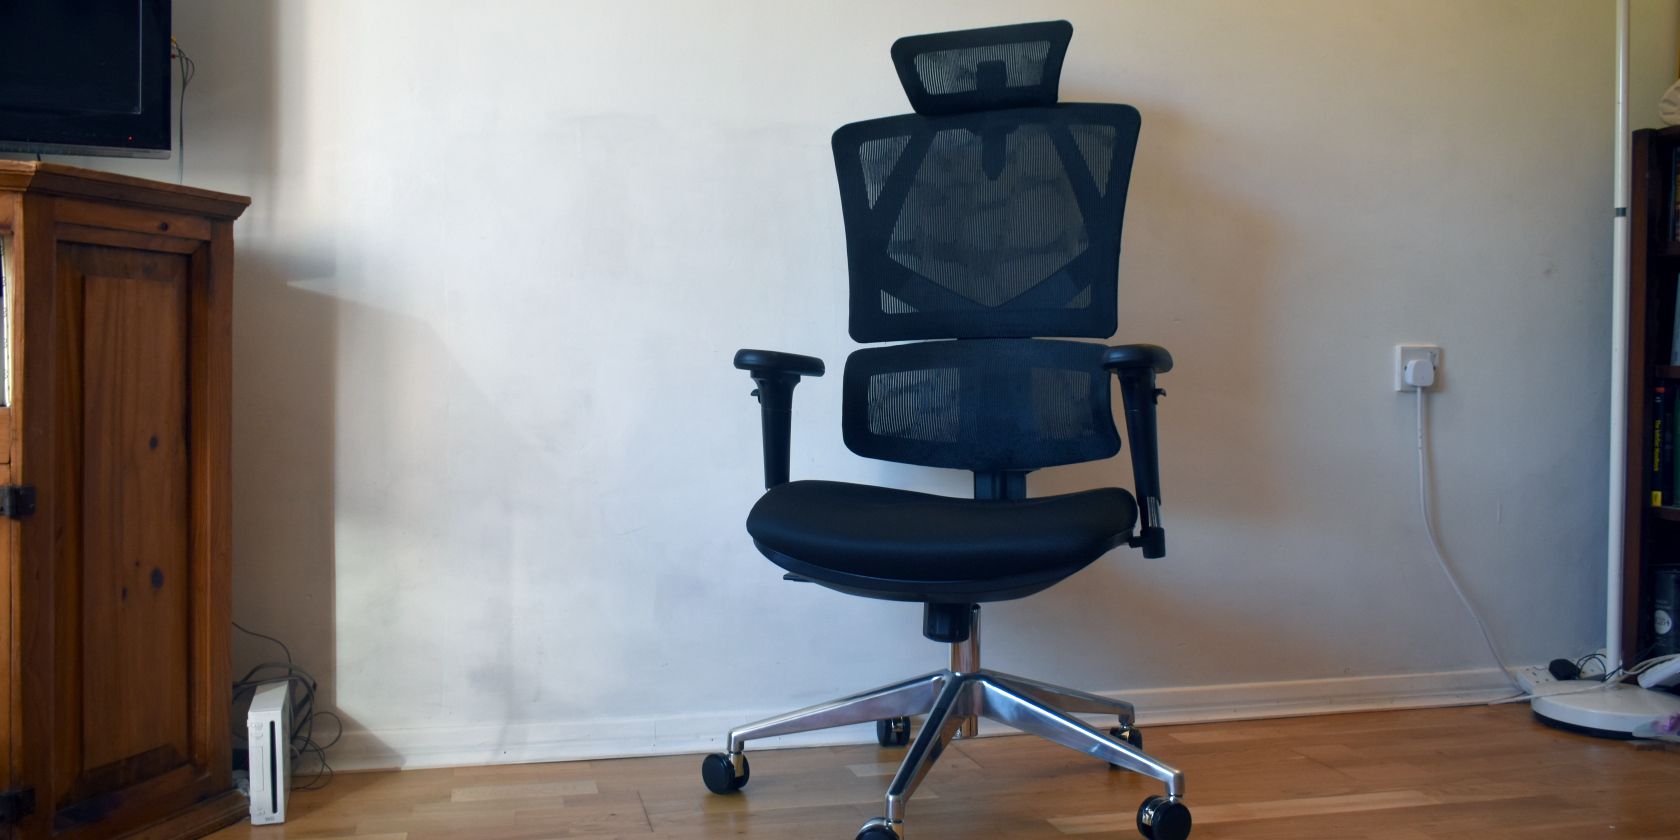 Sihoo M90D Ergonomic Office Chair Review